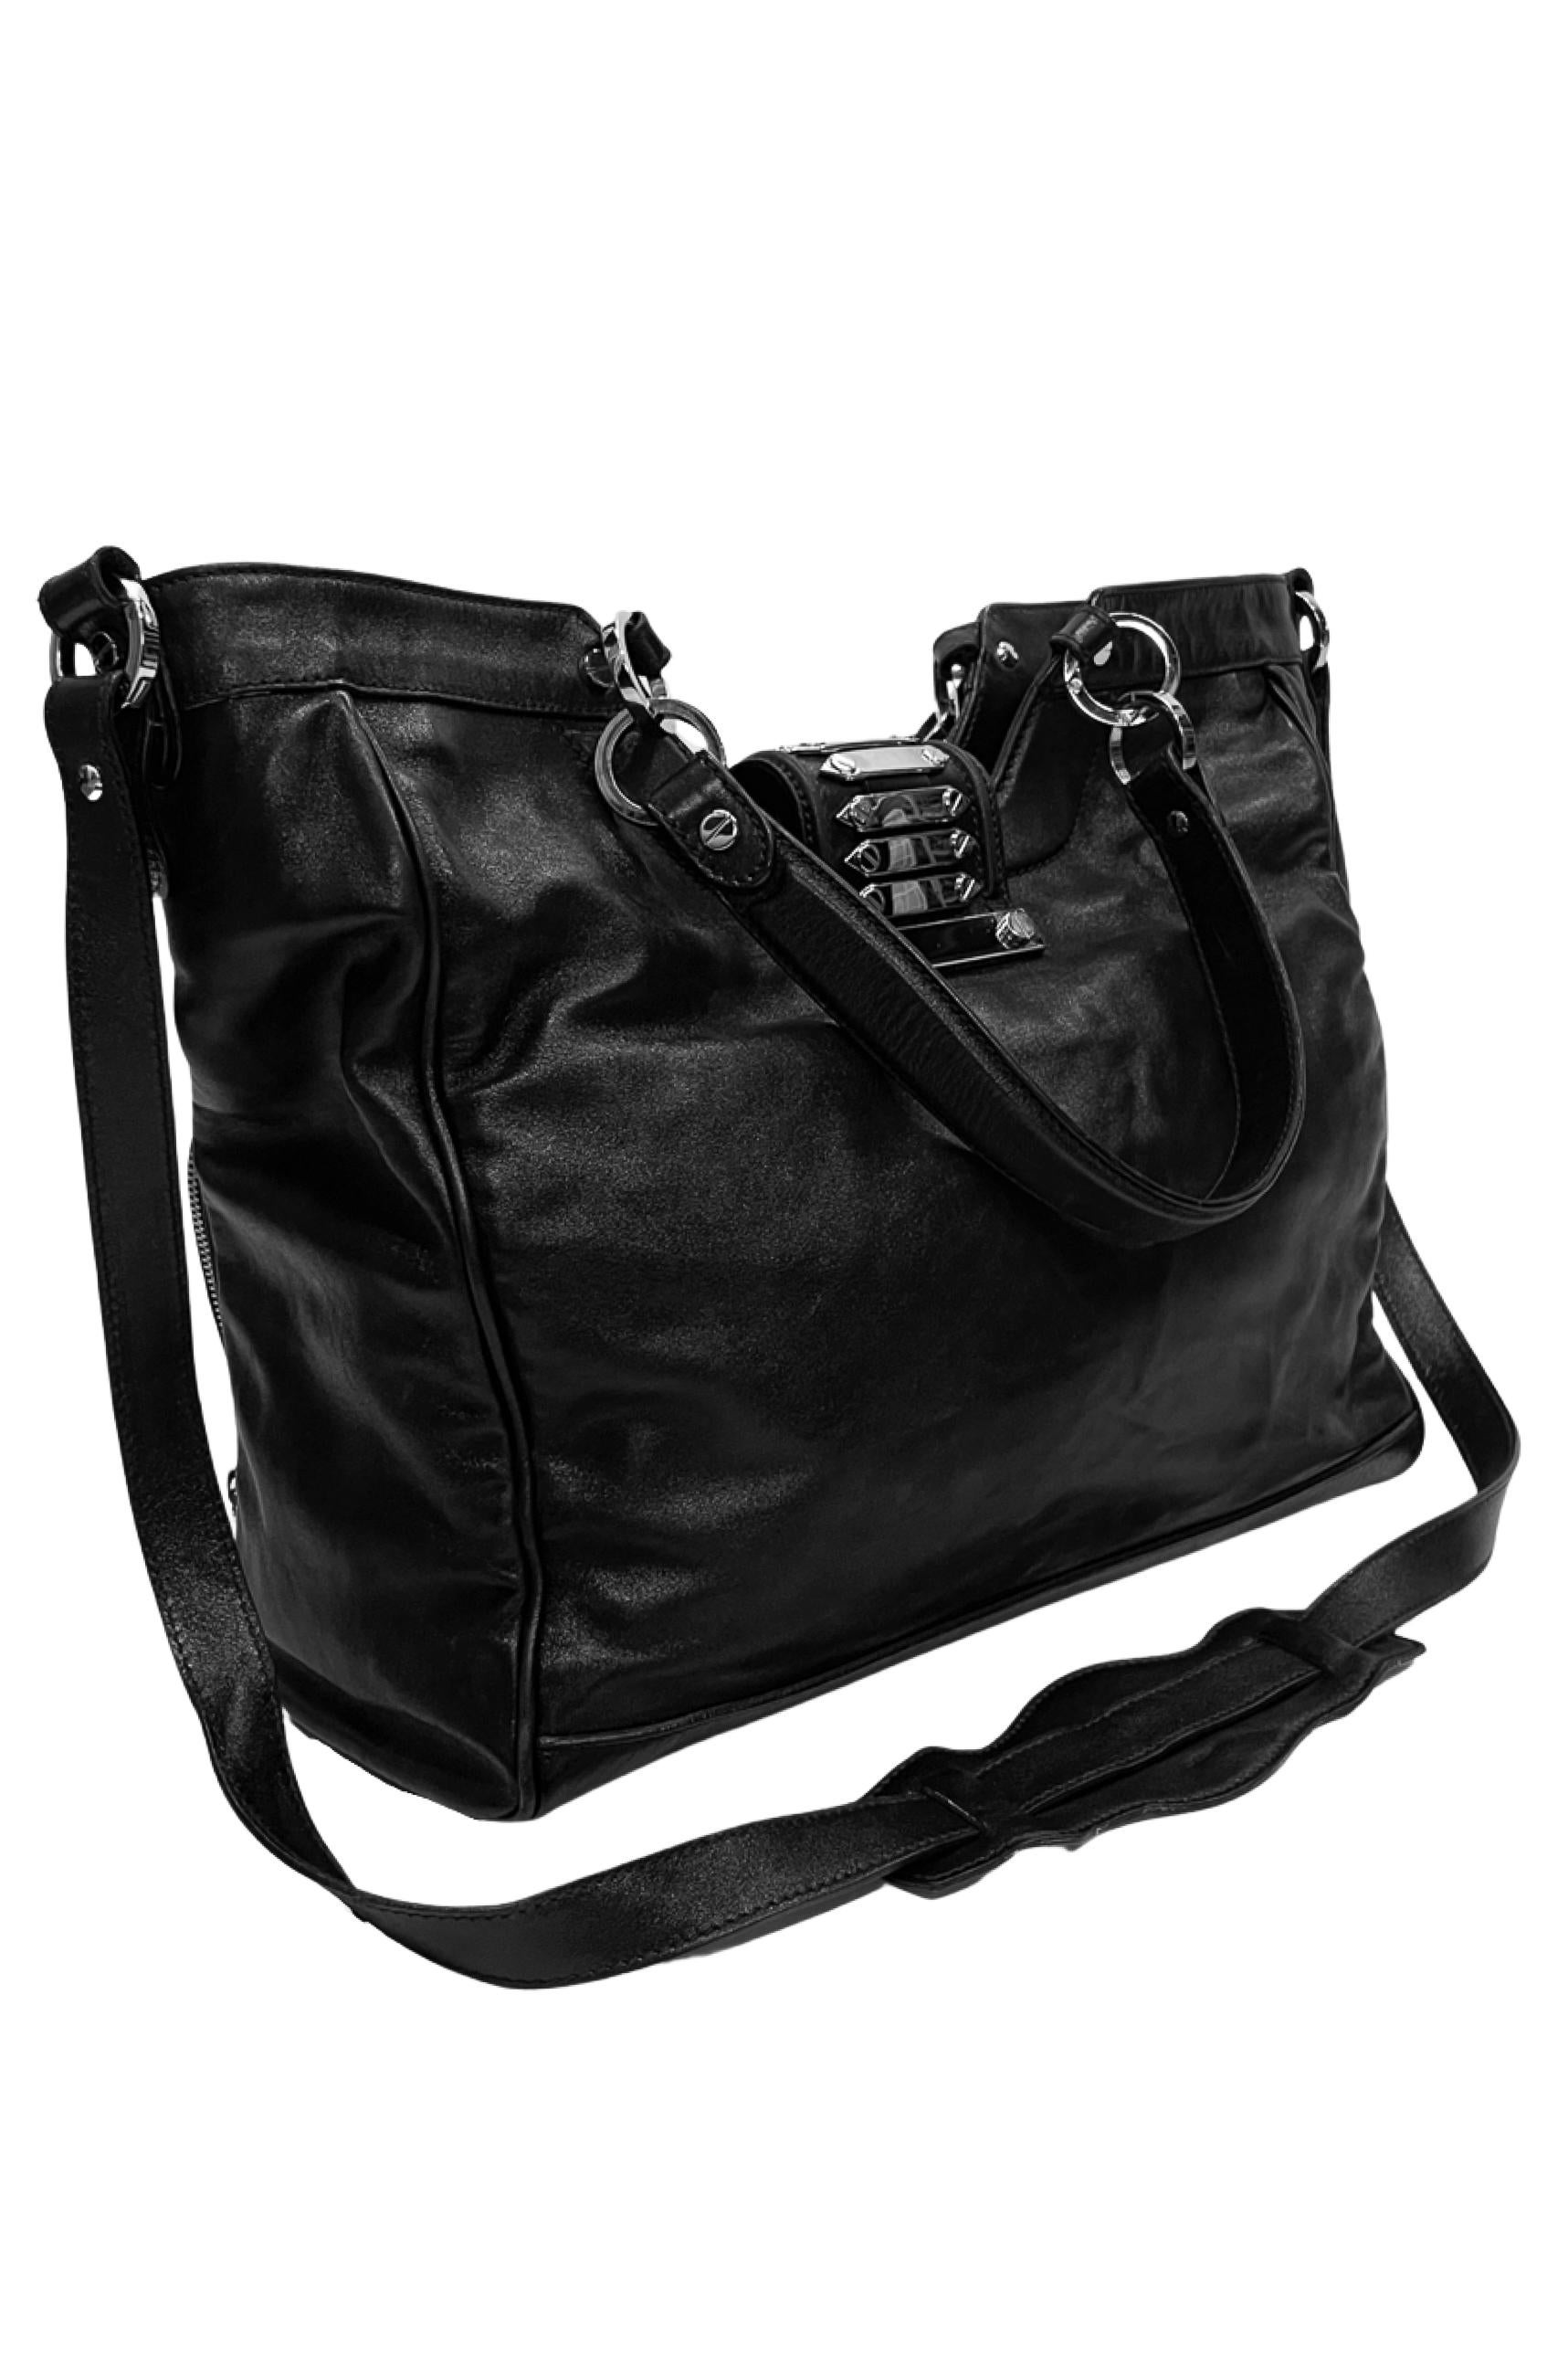 Balenciaga by Nicolas Ghesquiere Black Leather & Studded Chrome Bag 2007 For Sale 1